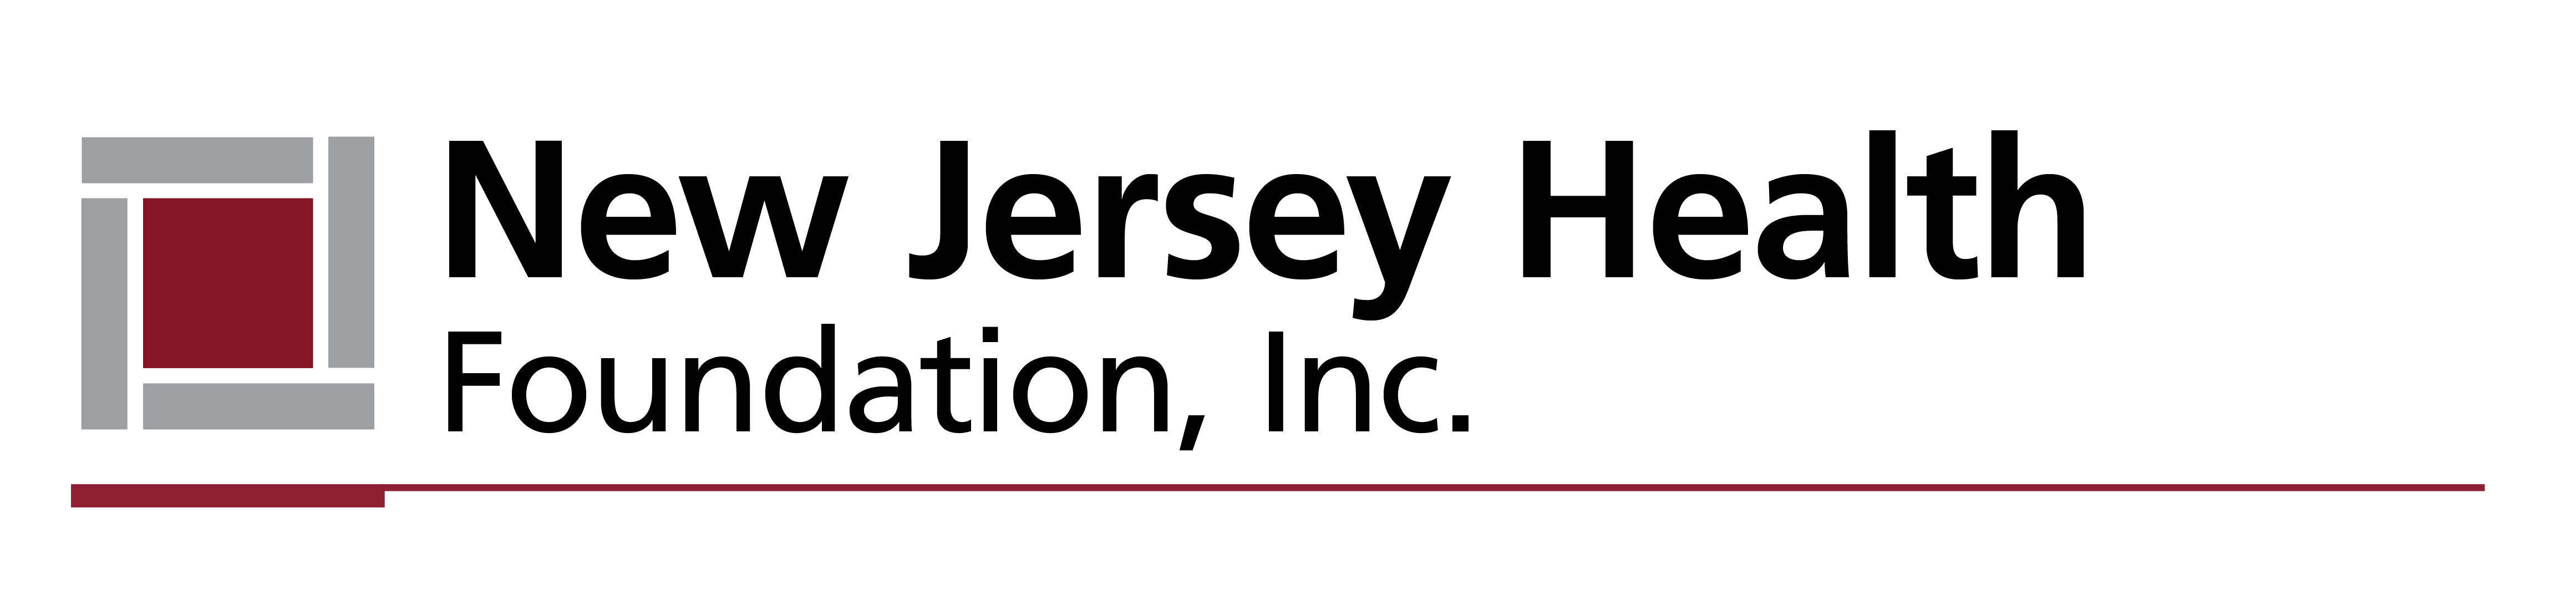 New Jersey Health Foundation Inc